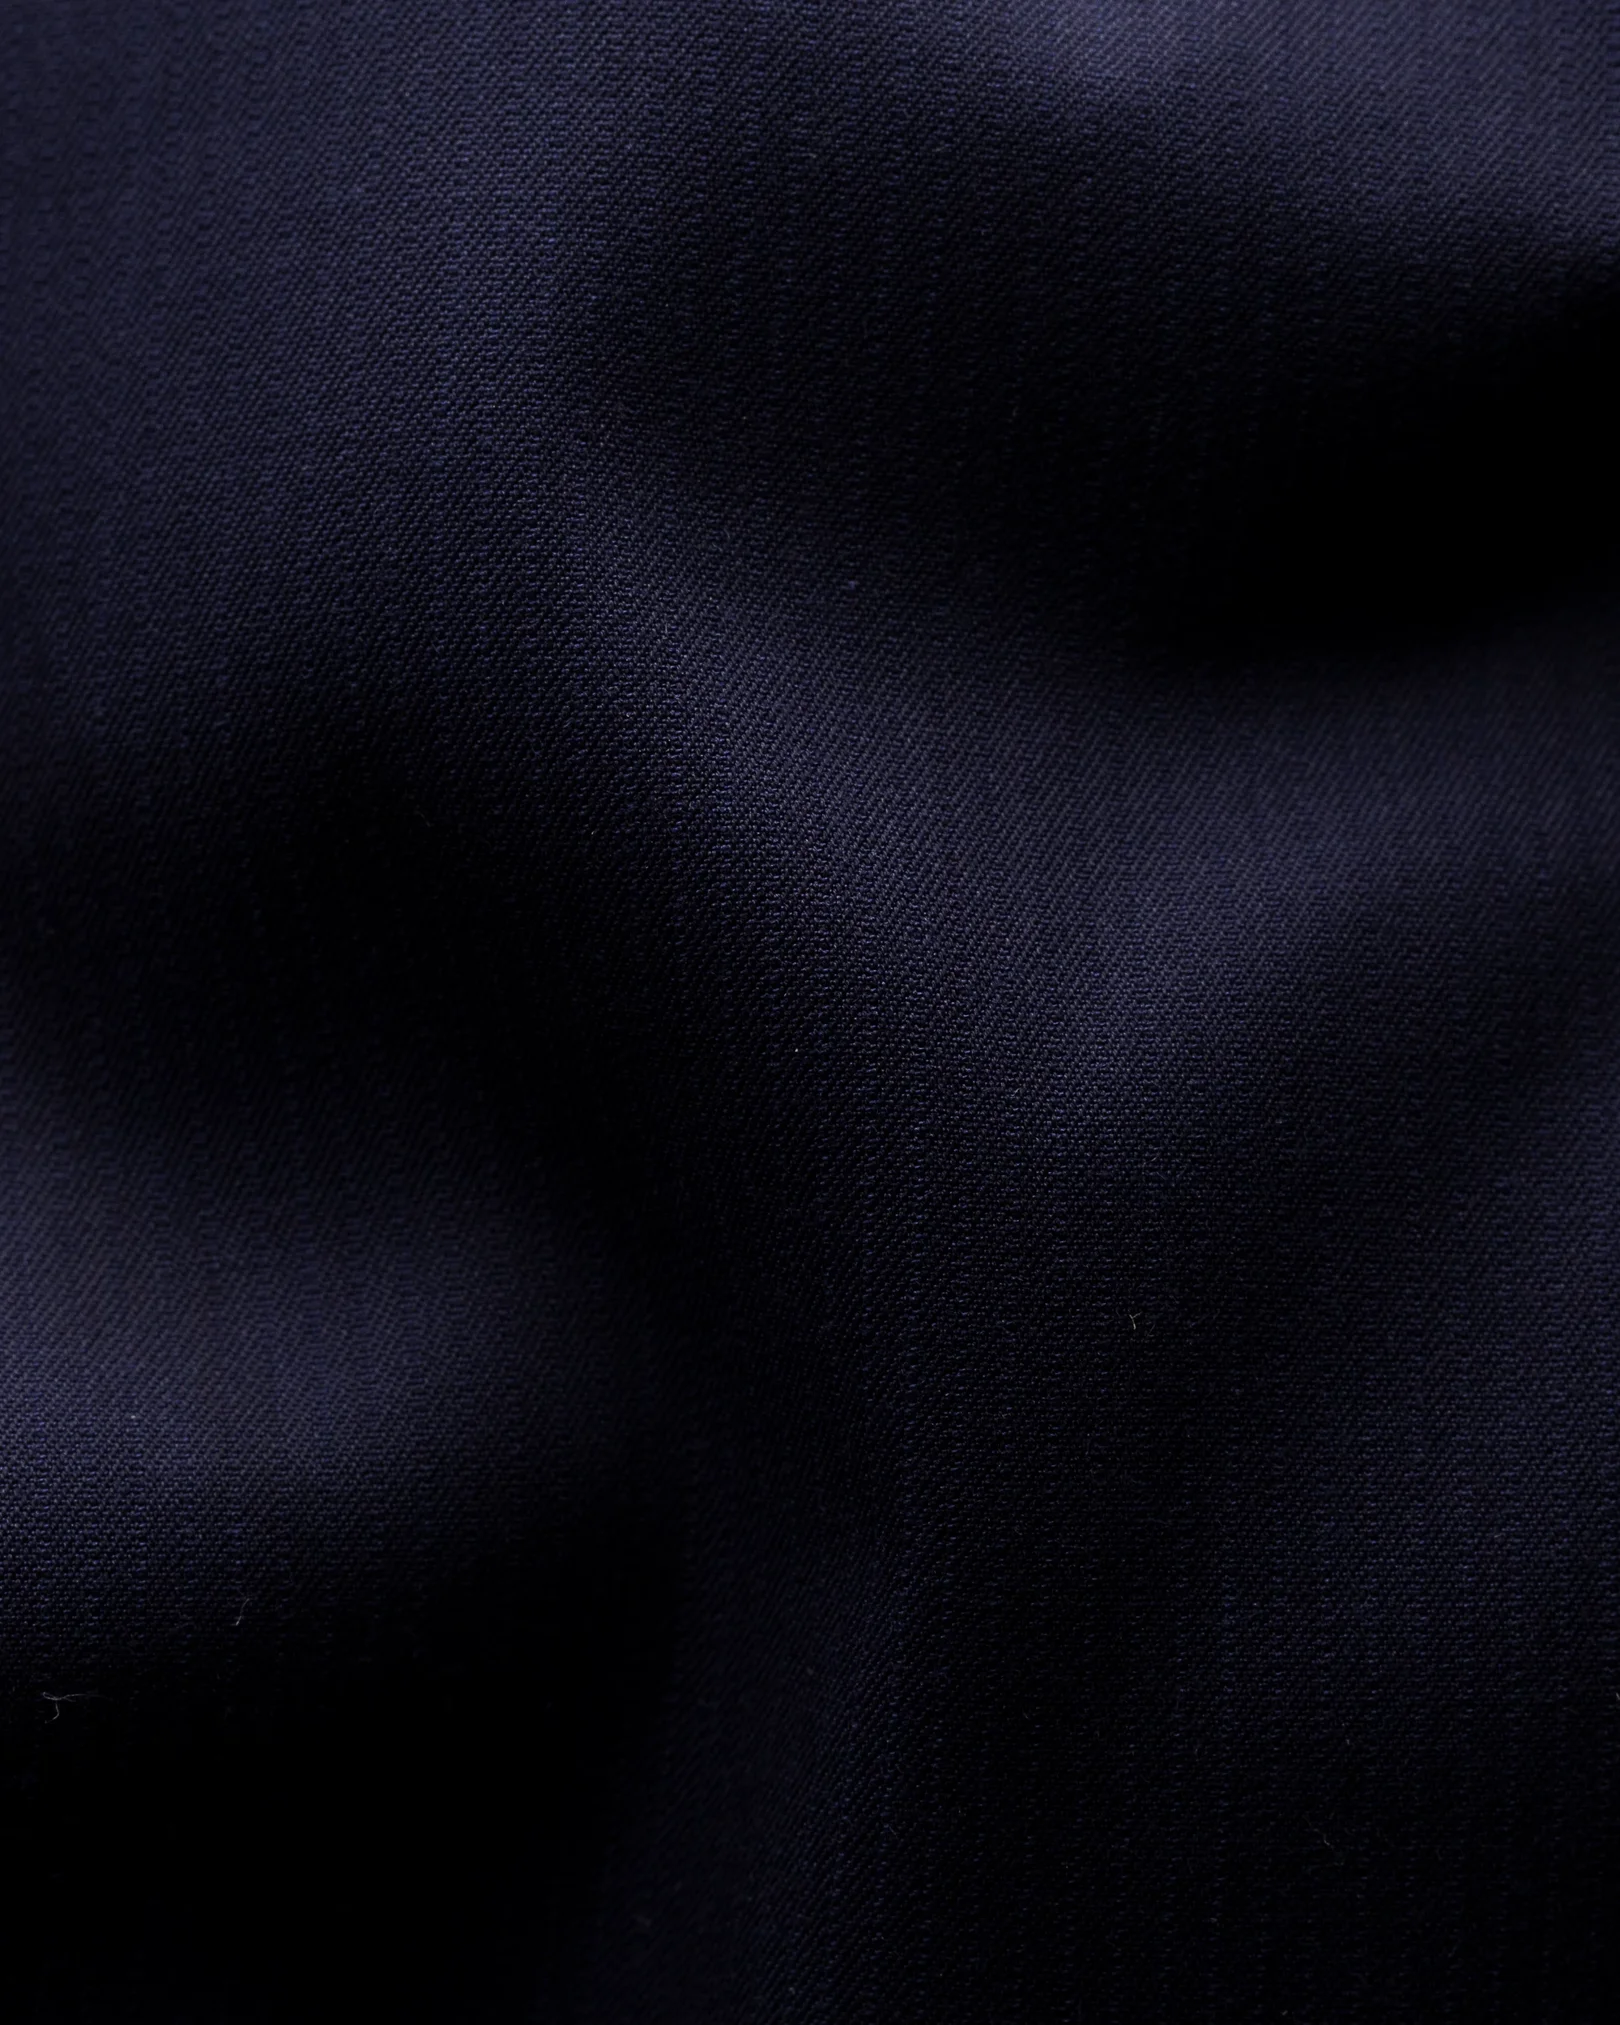 Eton - dark blue twill shirt extreme cut away